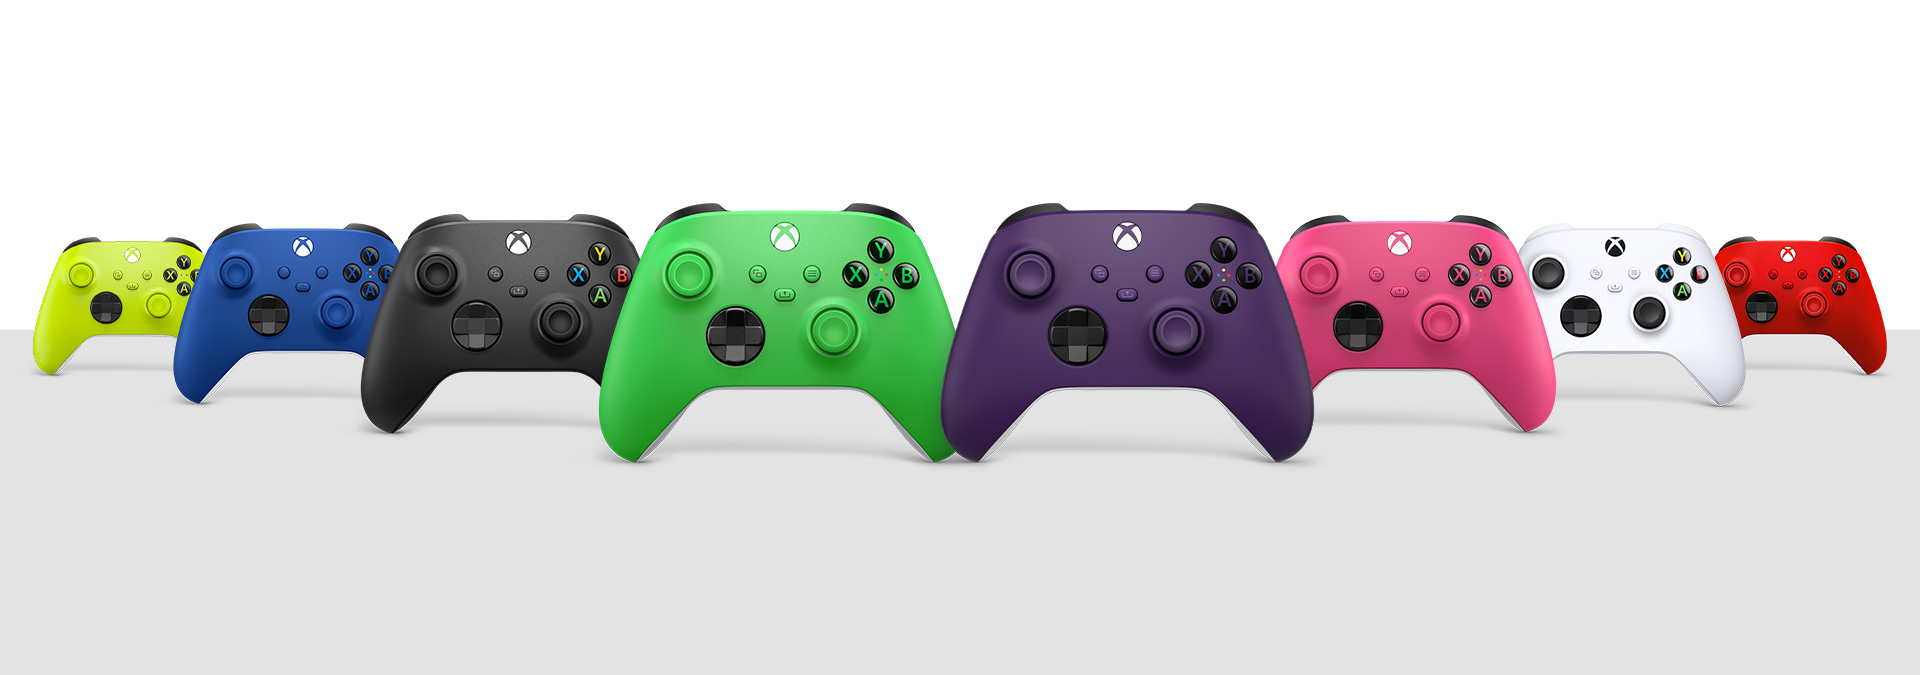 Bezdrátový ovladač pro Xbox – Carbon Black, Robot White, Shock Blue, Pulse Red, Electric Volt, Deep Pink, Velocity Green a Astral Purple